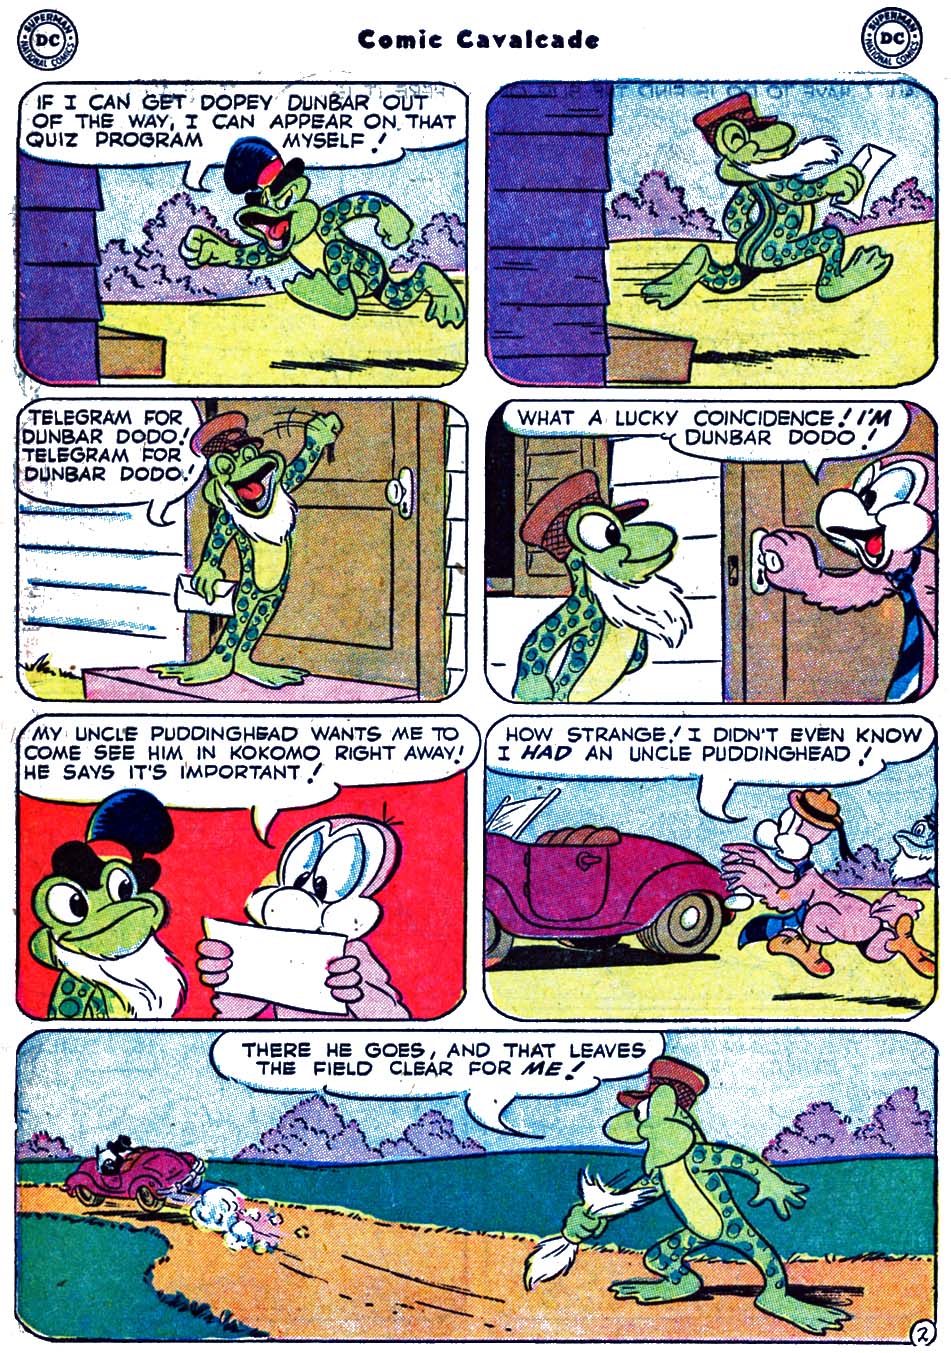 Comic Cavalcade issue 55 - Page 10